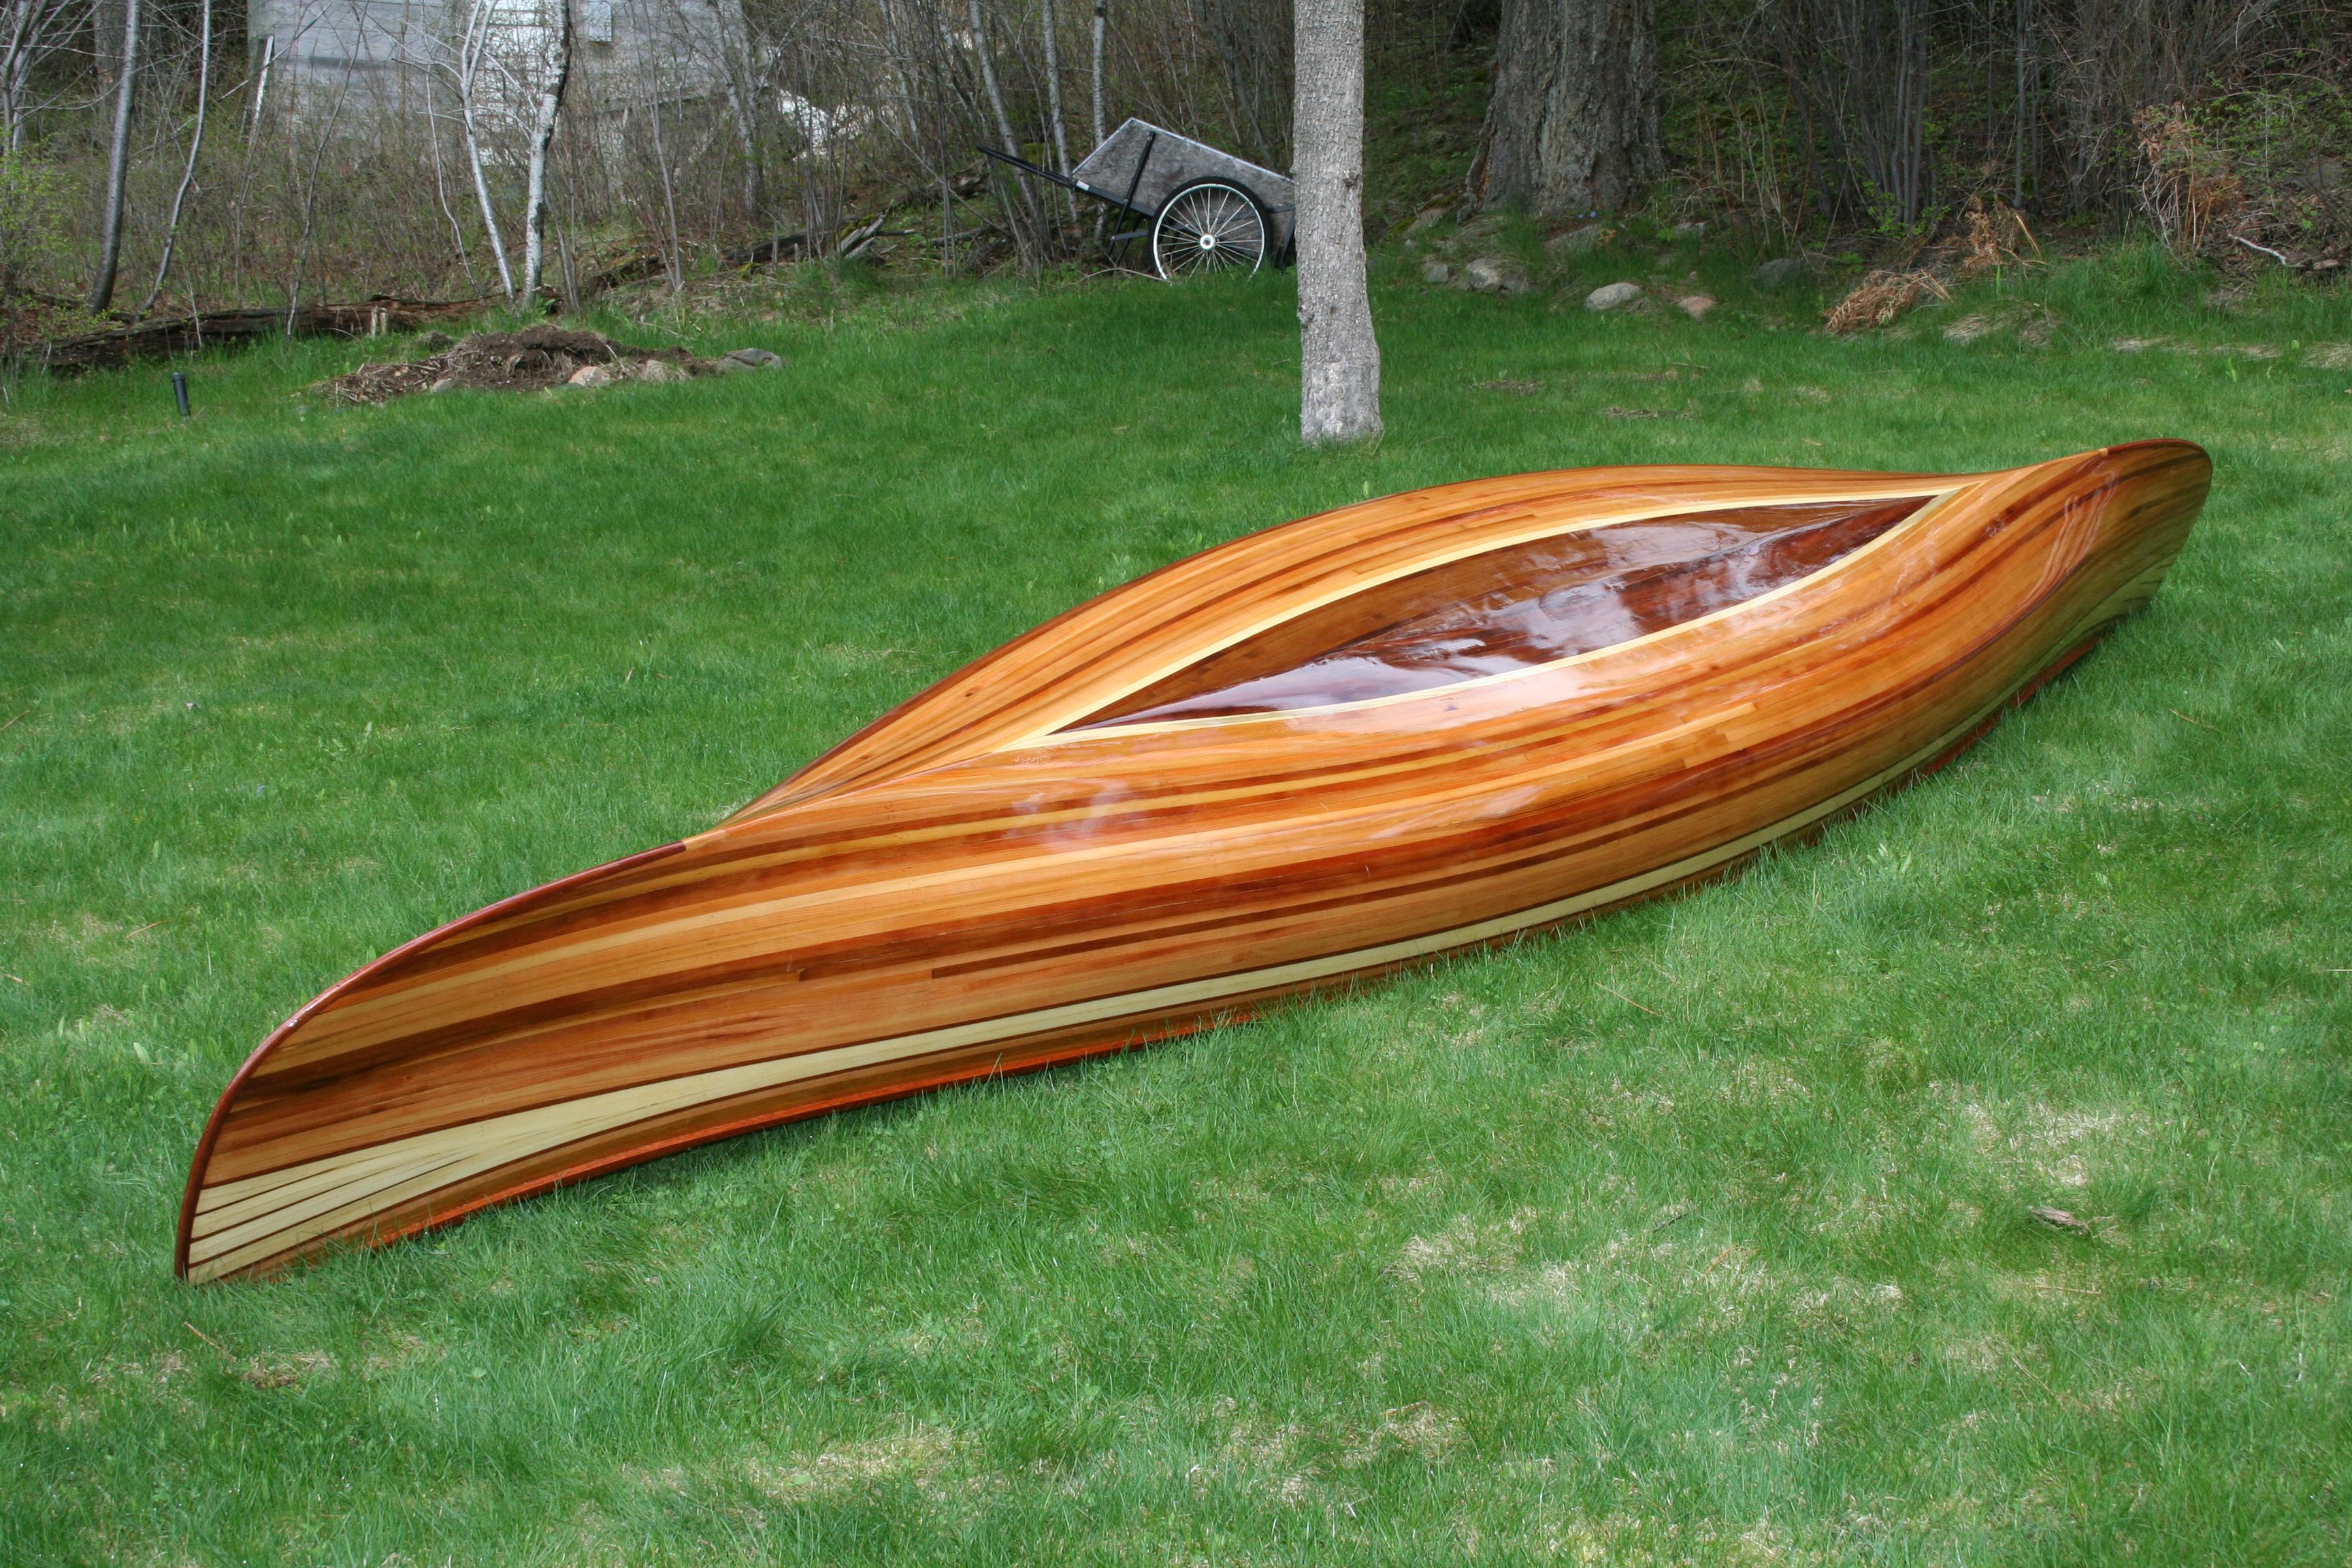  kayak is $ 8500 muzzleloader sea kayak the original heirloom sea kayak